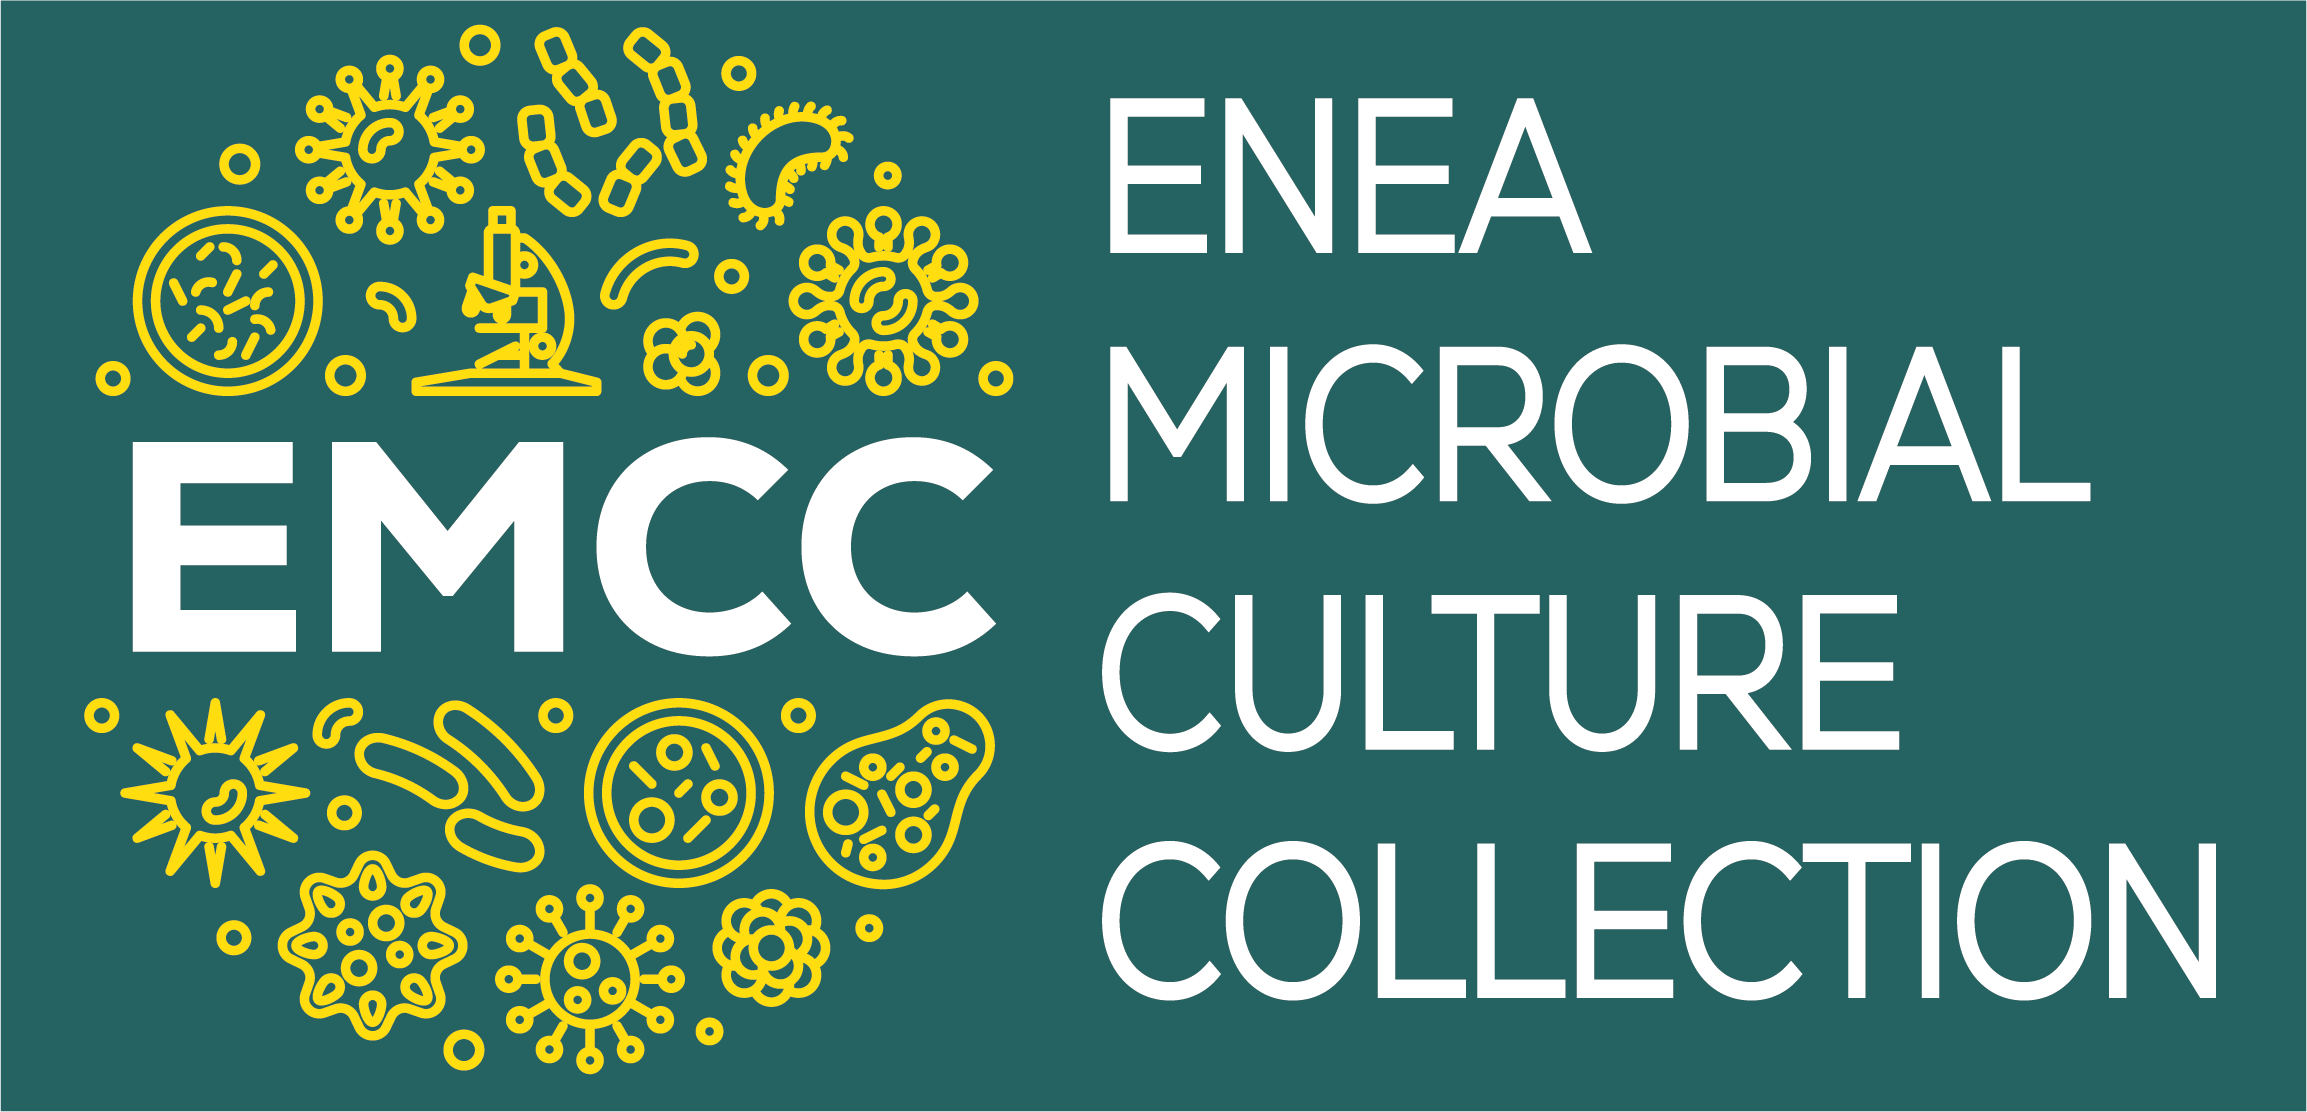 EMCC - ENEA MICROBIAL CULTURE COLLECTION